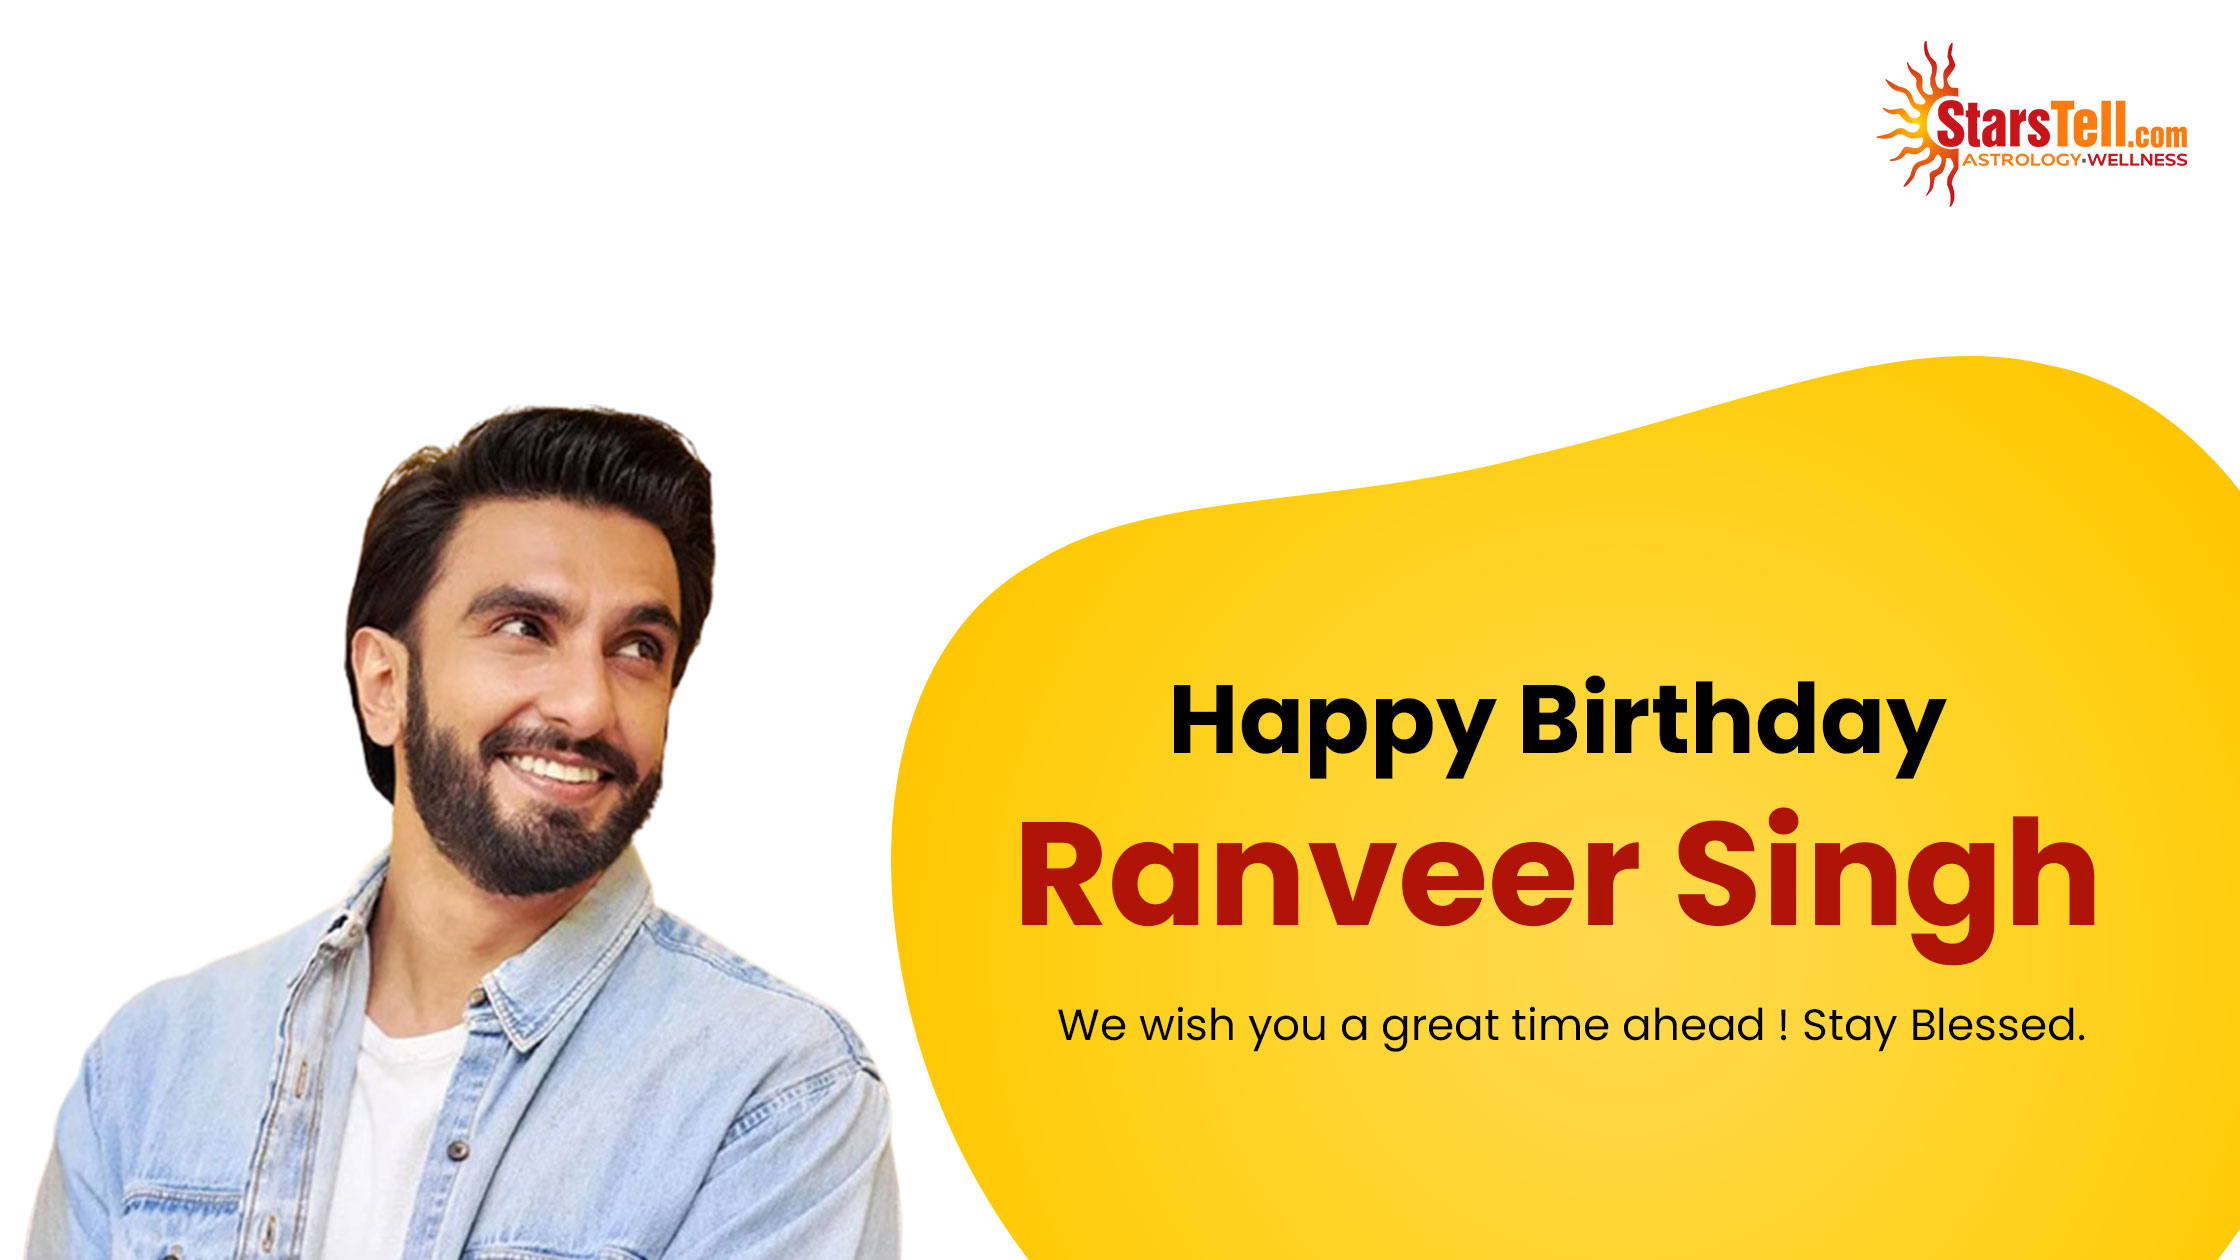 Happy Birthday Ranveer Singh: We wish you success and a great career!